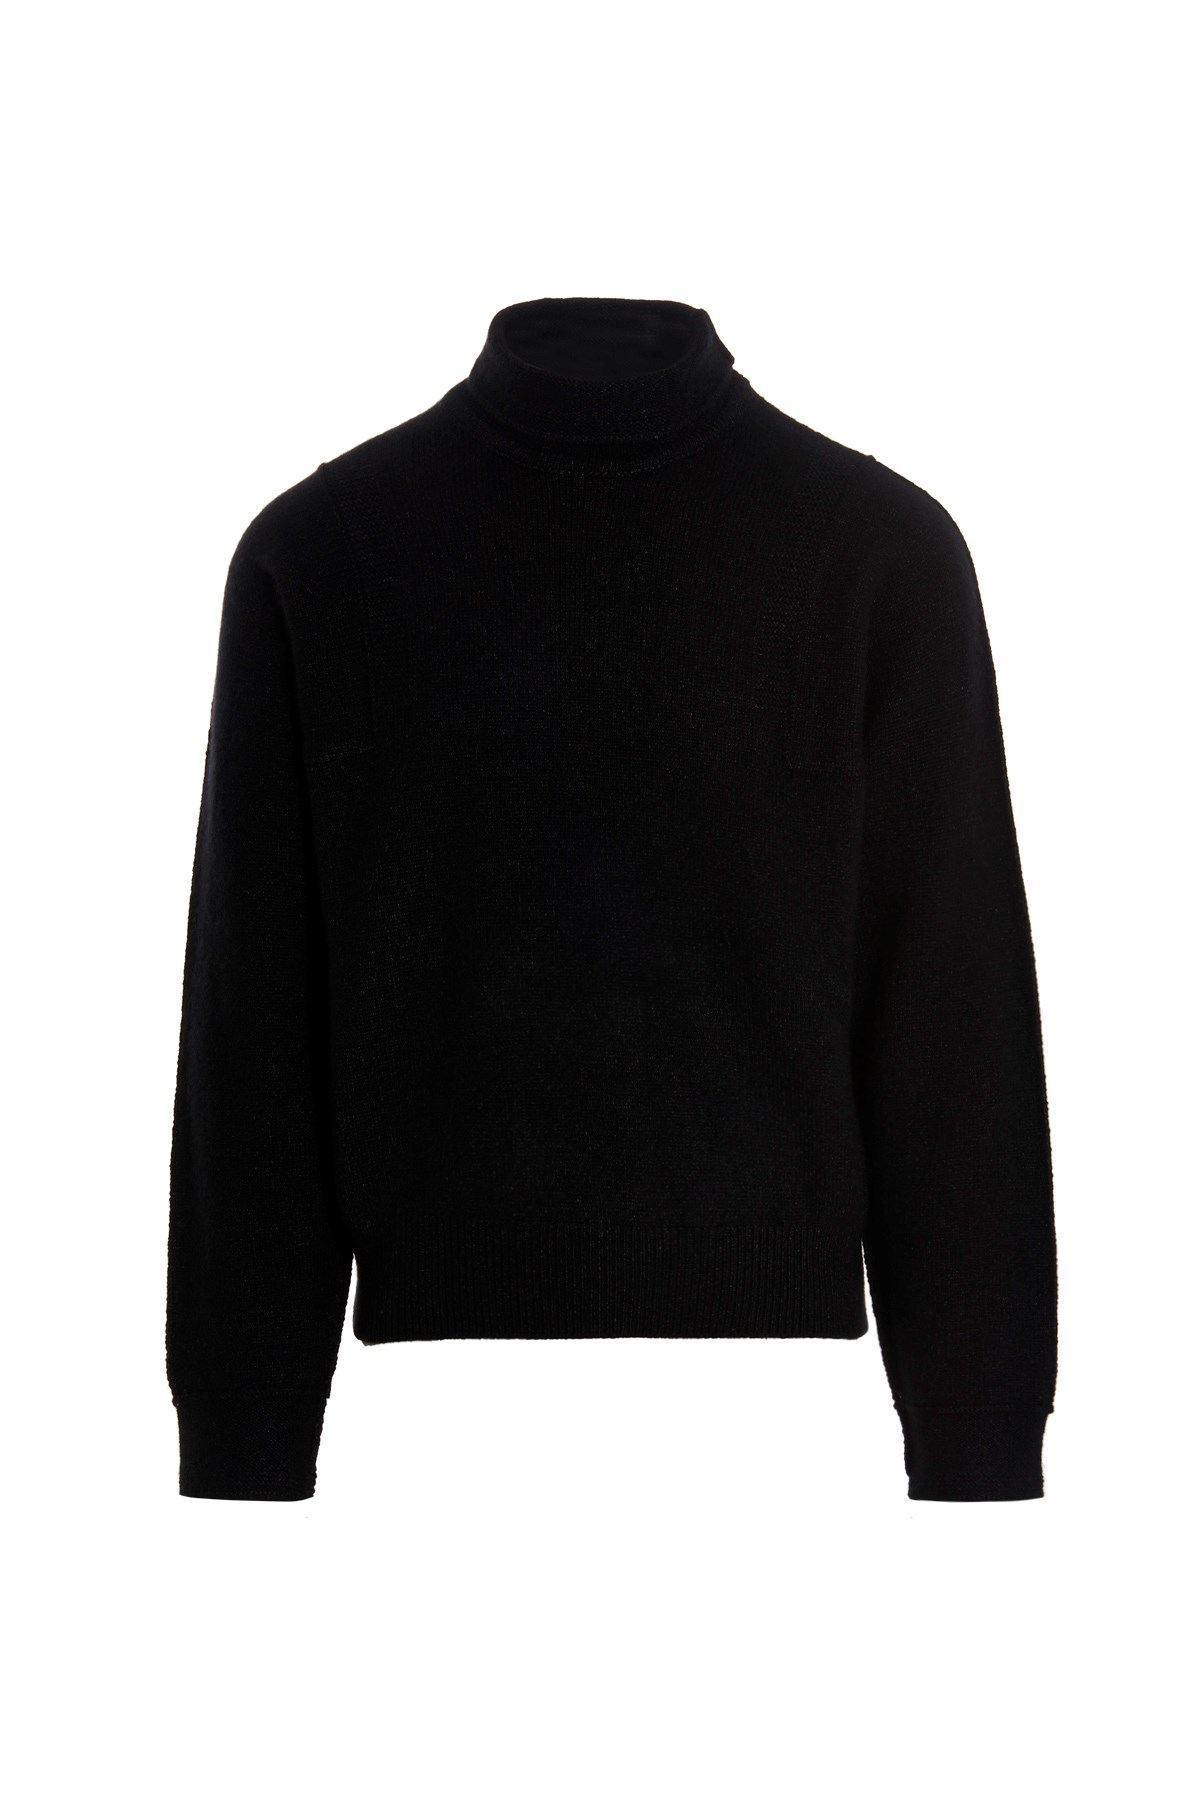 ERMENEGILDO ZEGNA Cashmere And Silk Blend Turtleneck Sweater